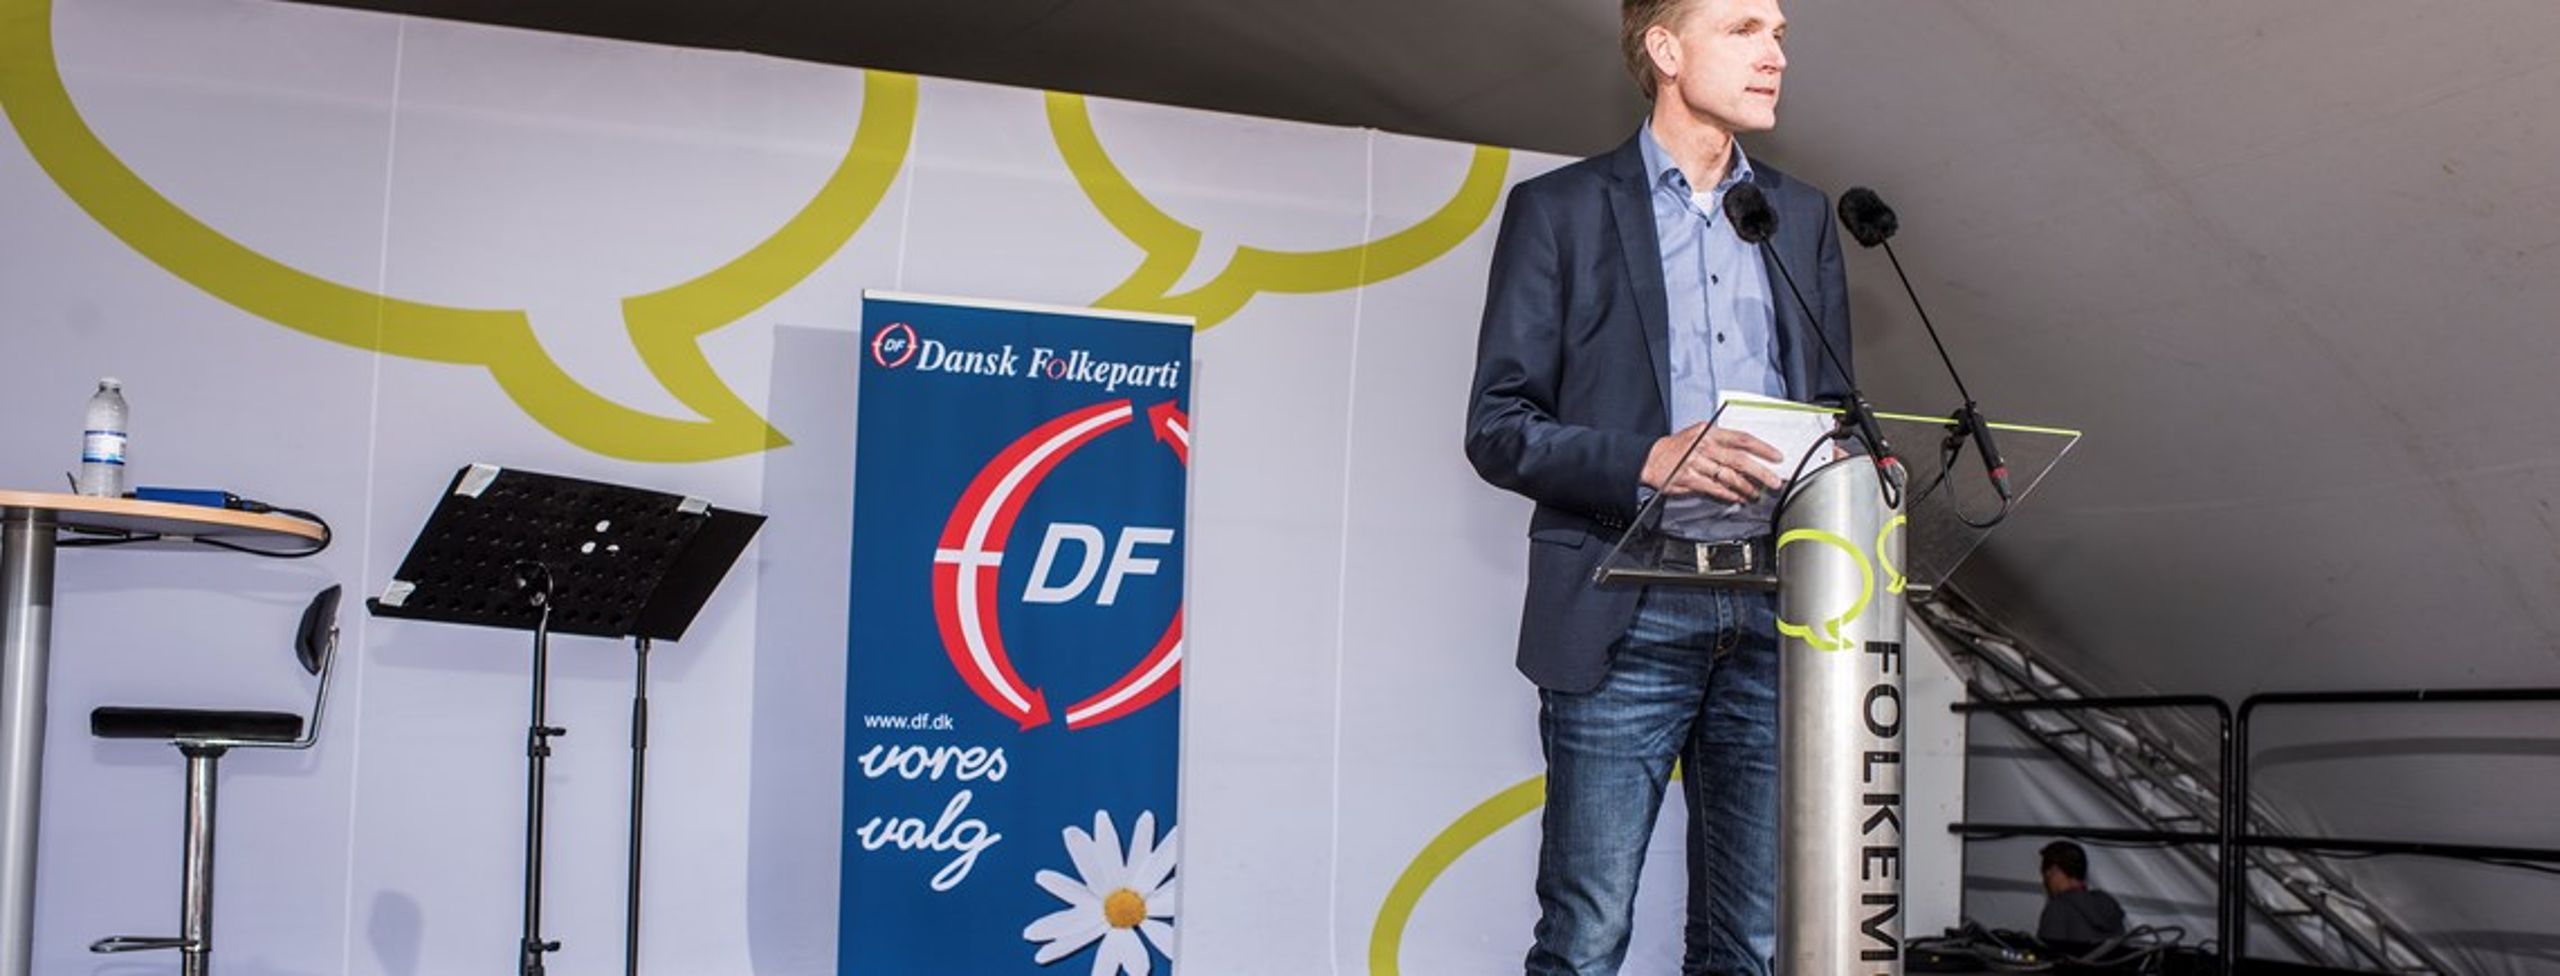 Dansk Folkeparti er klar til at gå i regering efter et folketingsvalg, meddeler formand Kristian Thulesen Dahl i sin tale på Folkemødet.